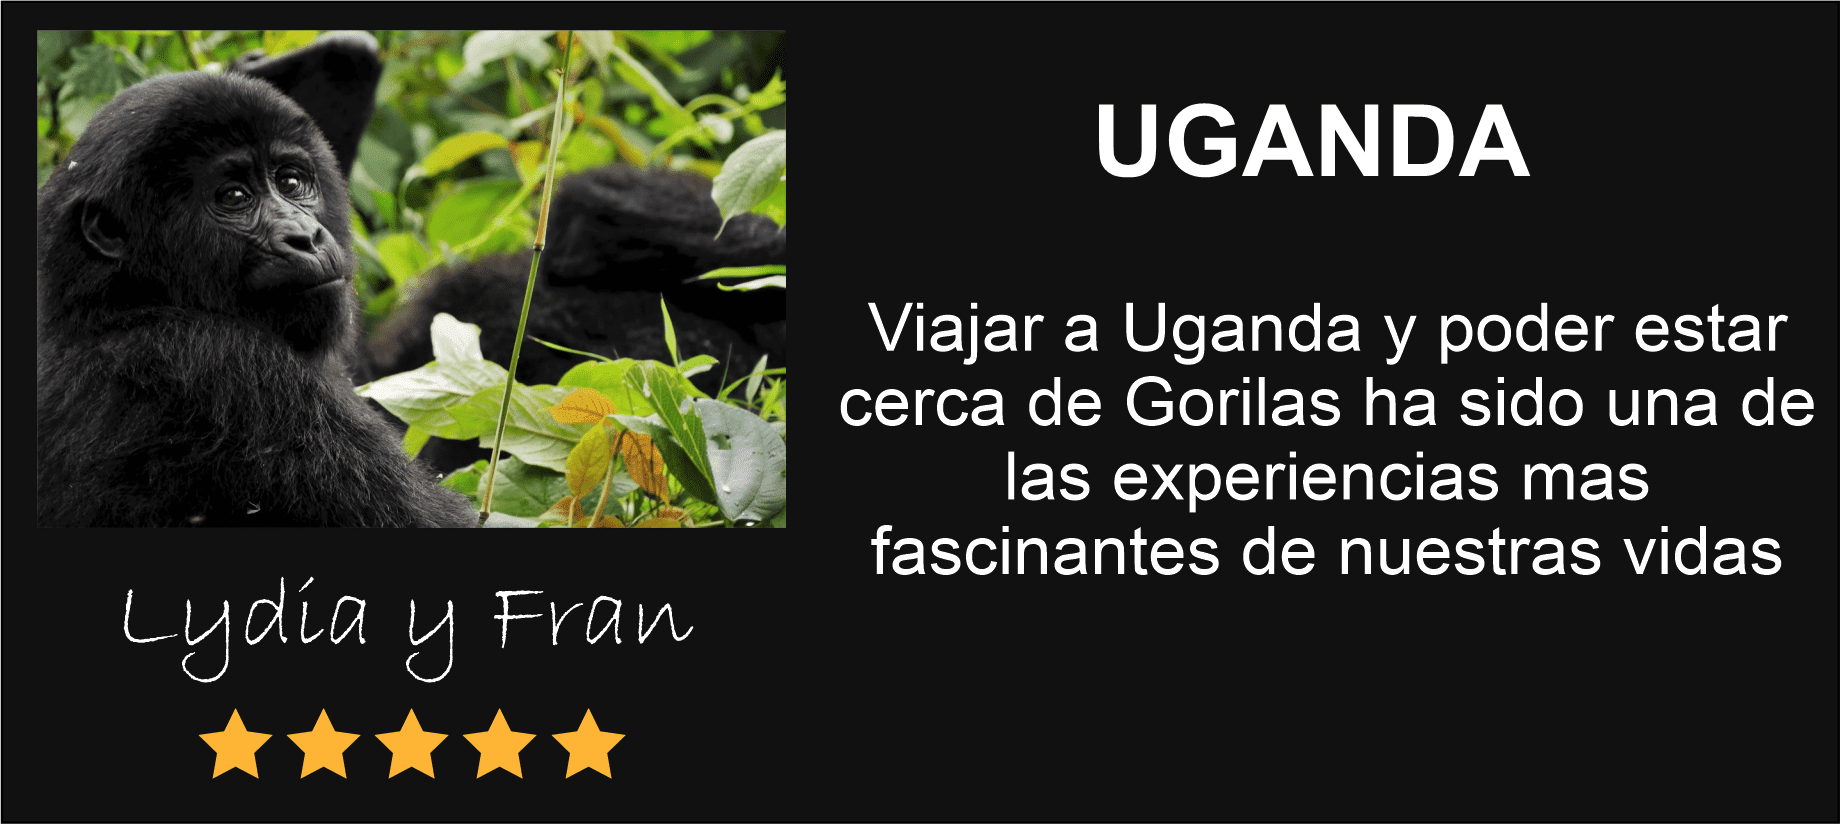 reseña-uganda